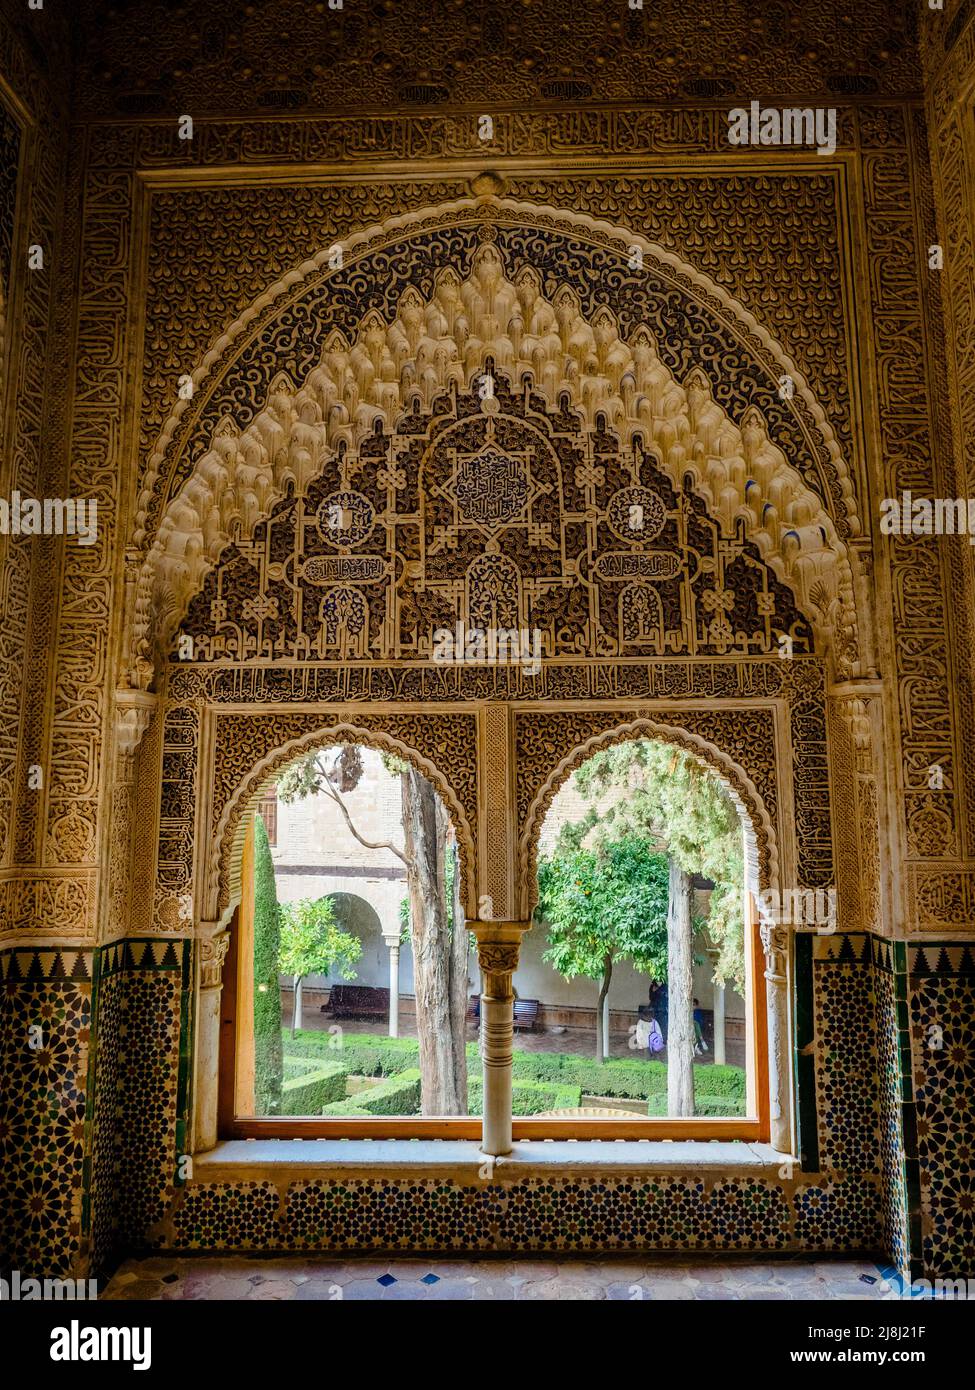 Mirador de Lindaraja nei palazzi reali Nasrid - Alhambra Complex - Granada, Spagna Foto Stock